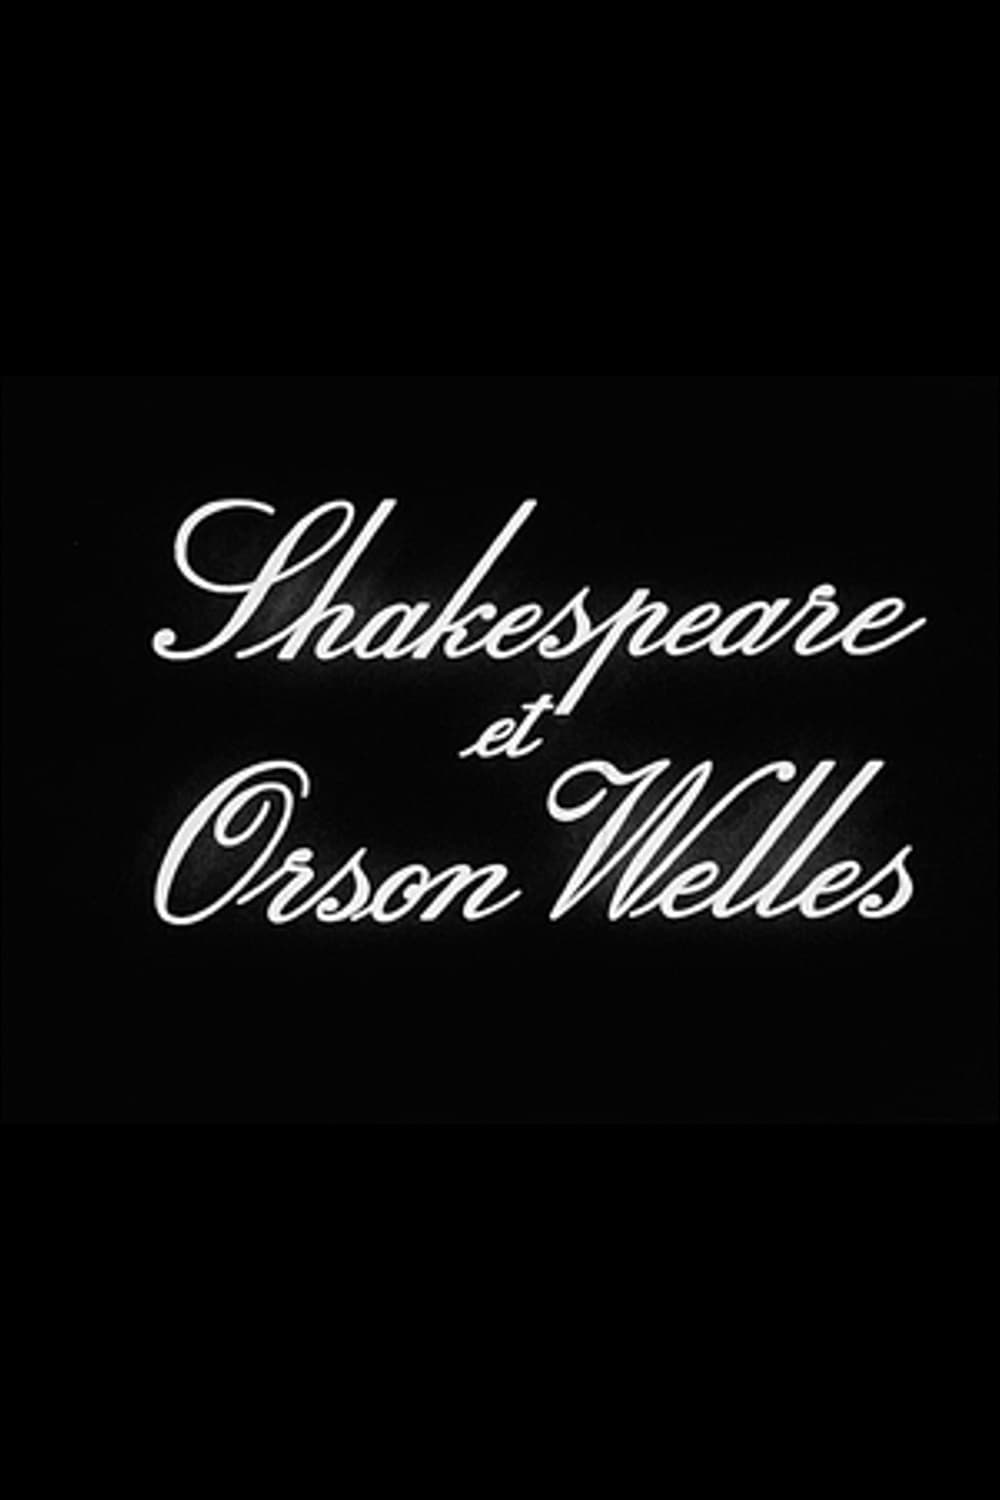 Shakespeare et Orson Welles